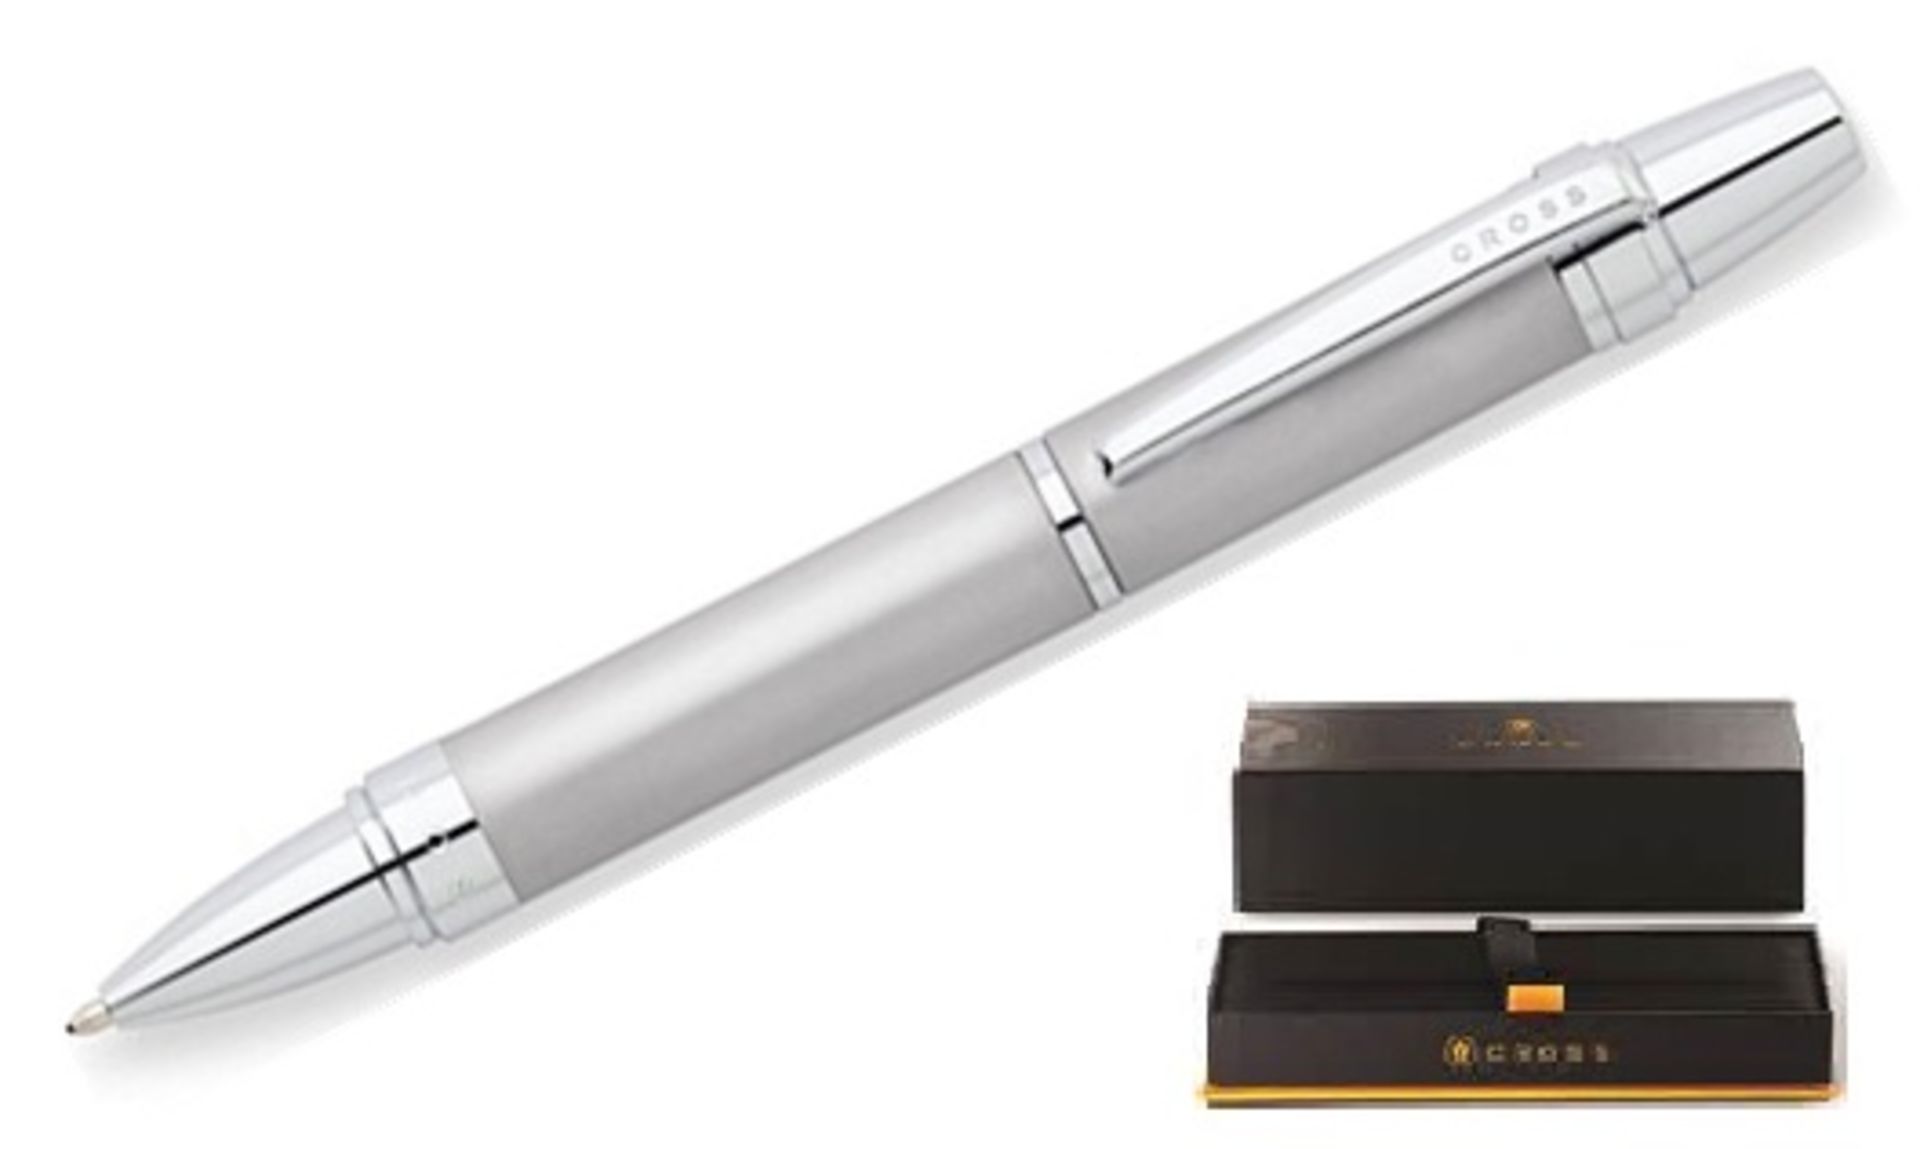 V *TRADE QTY* Brand New Cross Nile Satin Chrome Ballpoint Pen - RRP £25.00 - Amazon Price £17.68 X 4